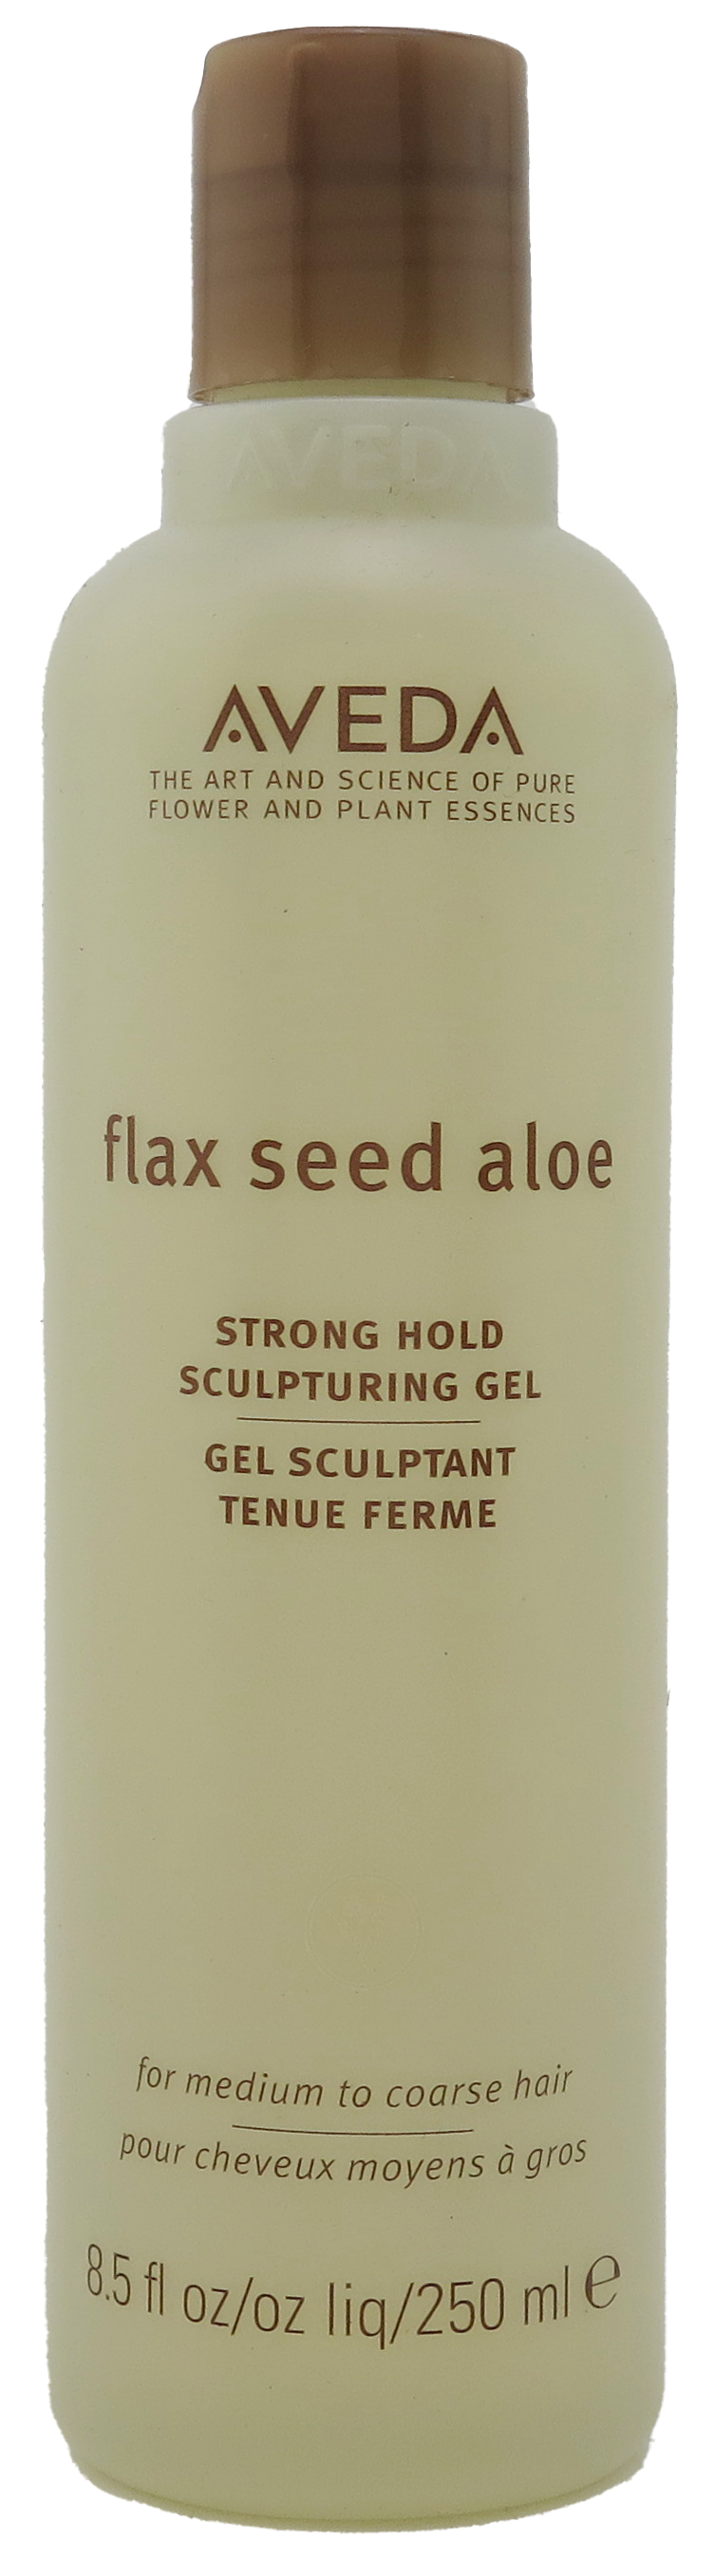 Aveda Flax Seed Aloe Sculpturing Gel 8.5 fl oz